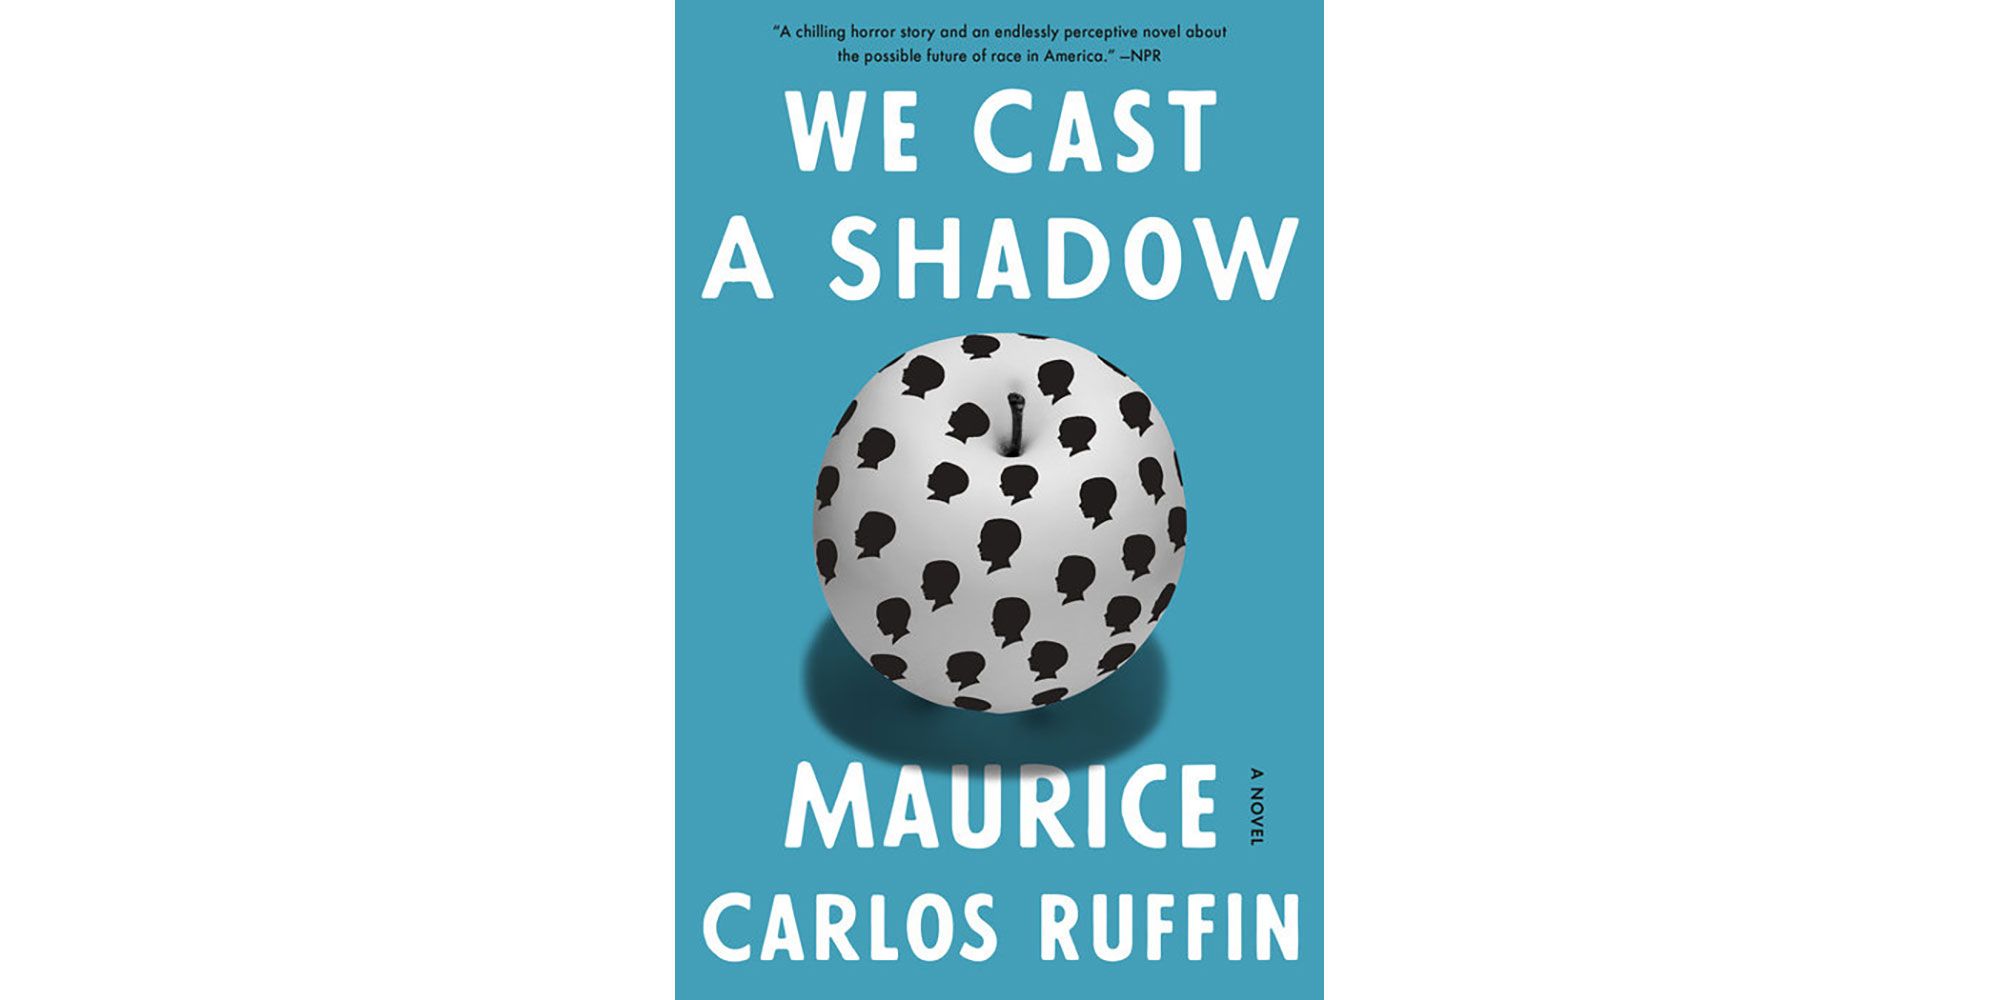 maurice carlos ruffin we cast a shadow